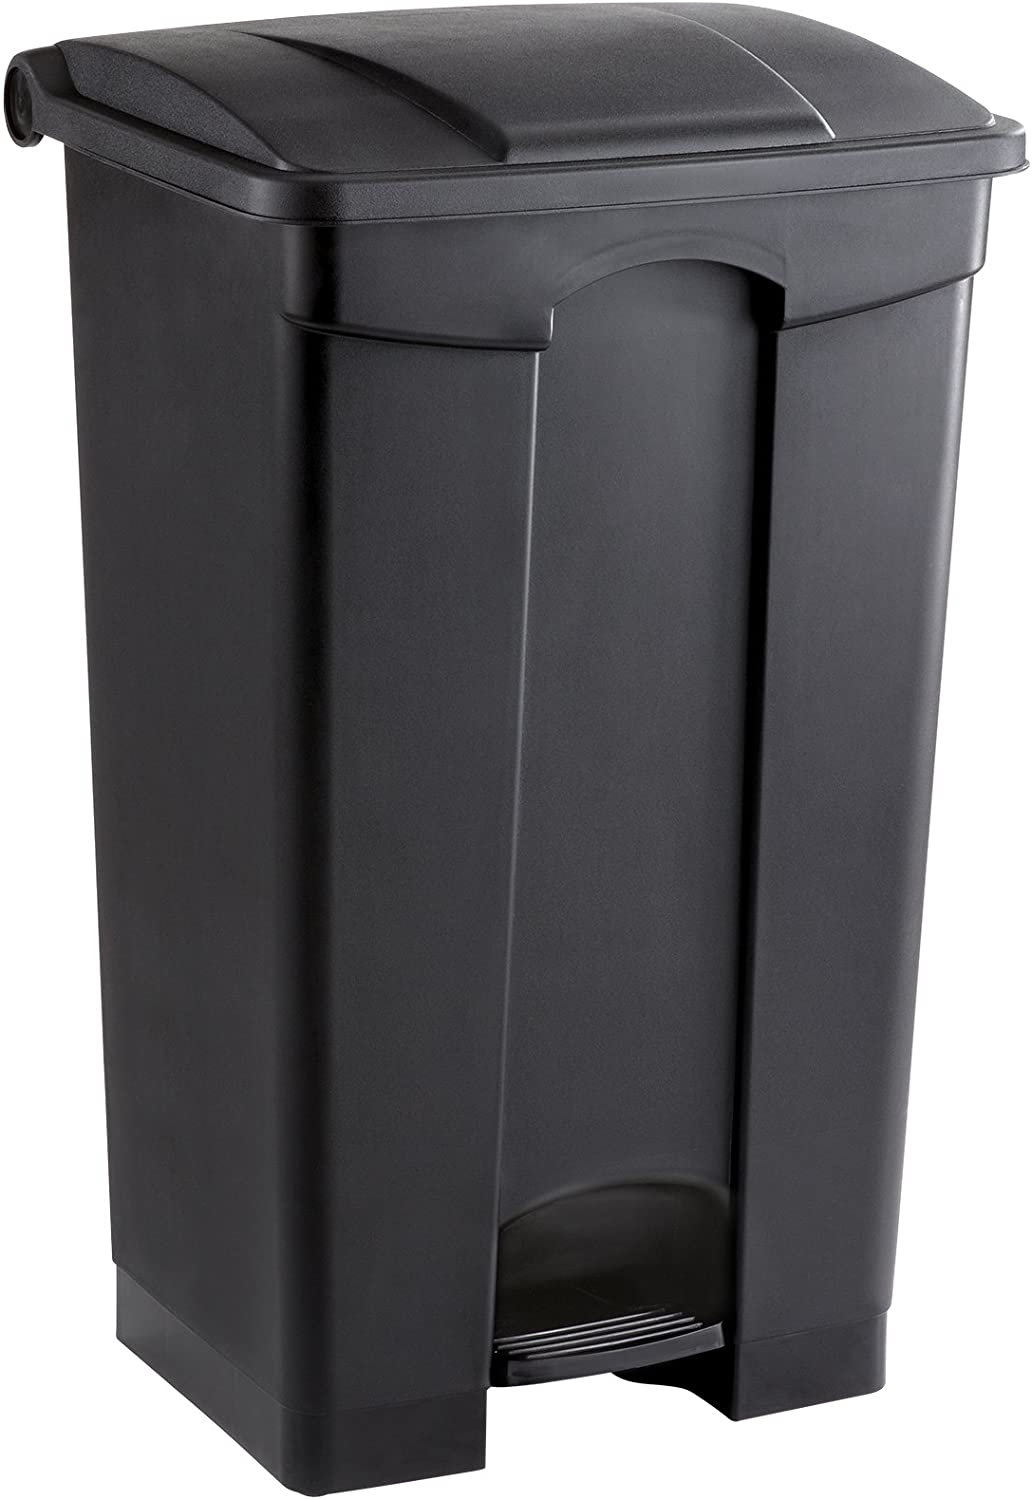 Safco Plastic Step-On Outdoor Garbage Bin, 23-Gallon